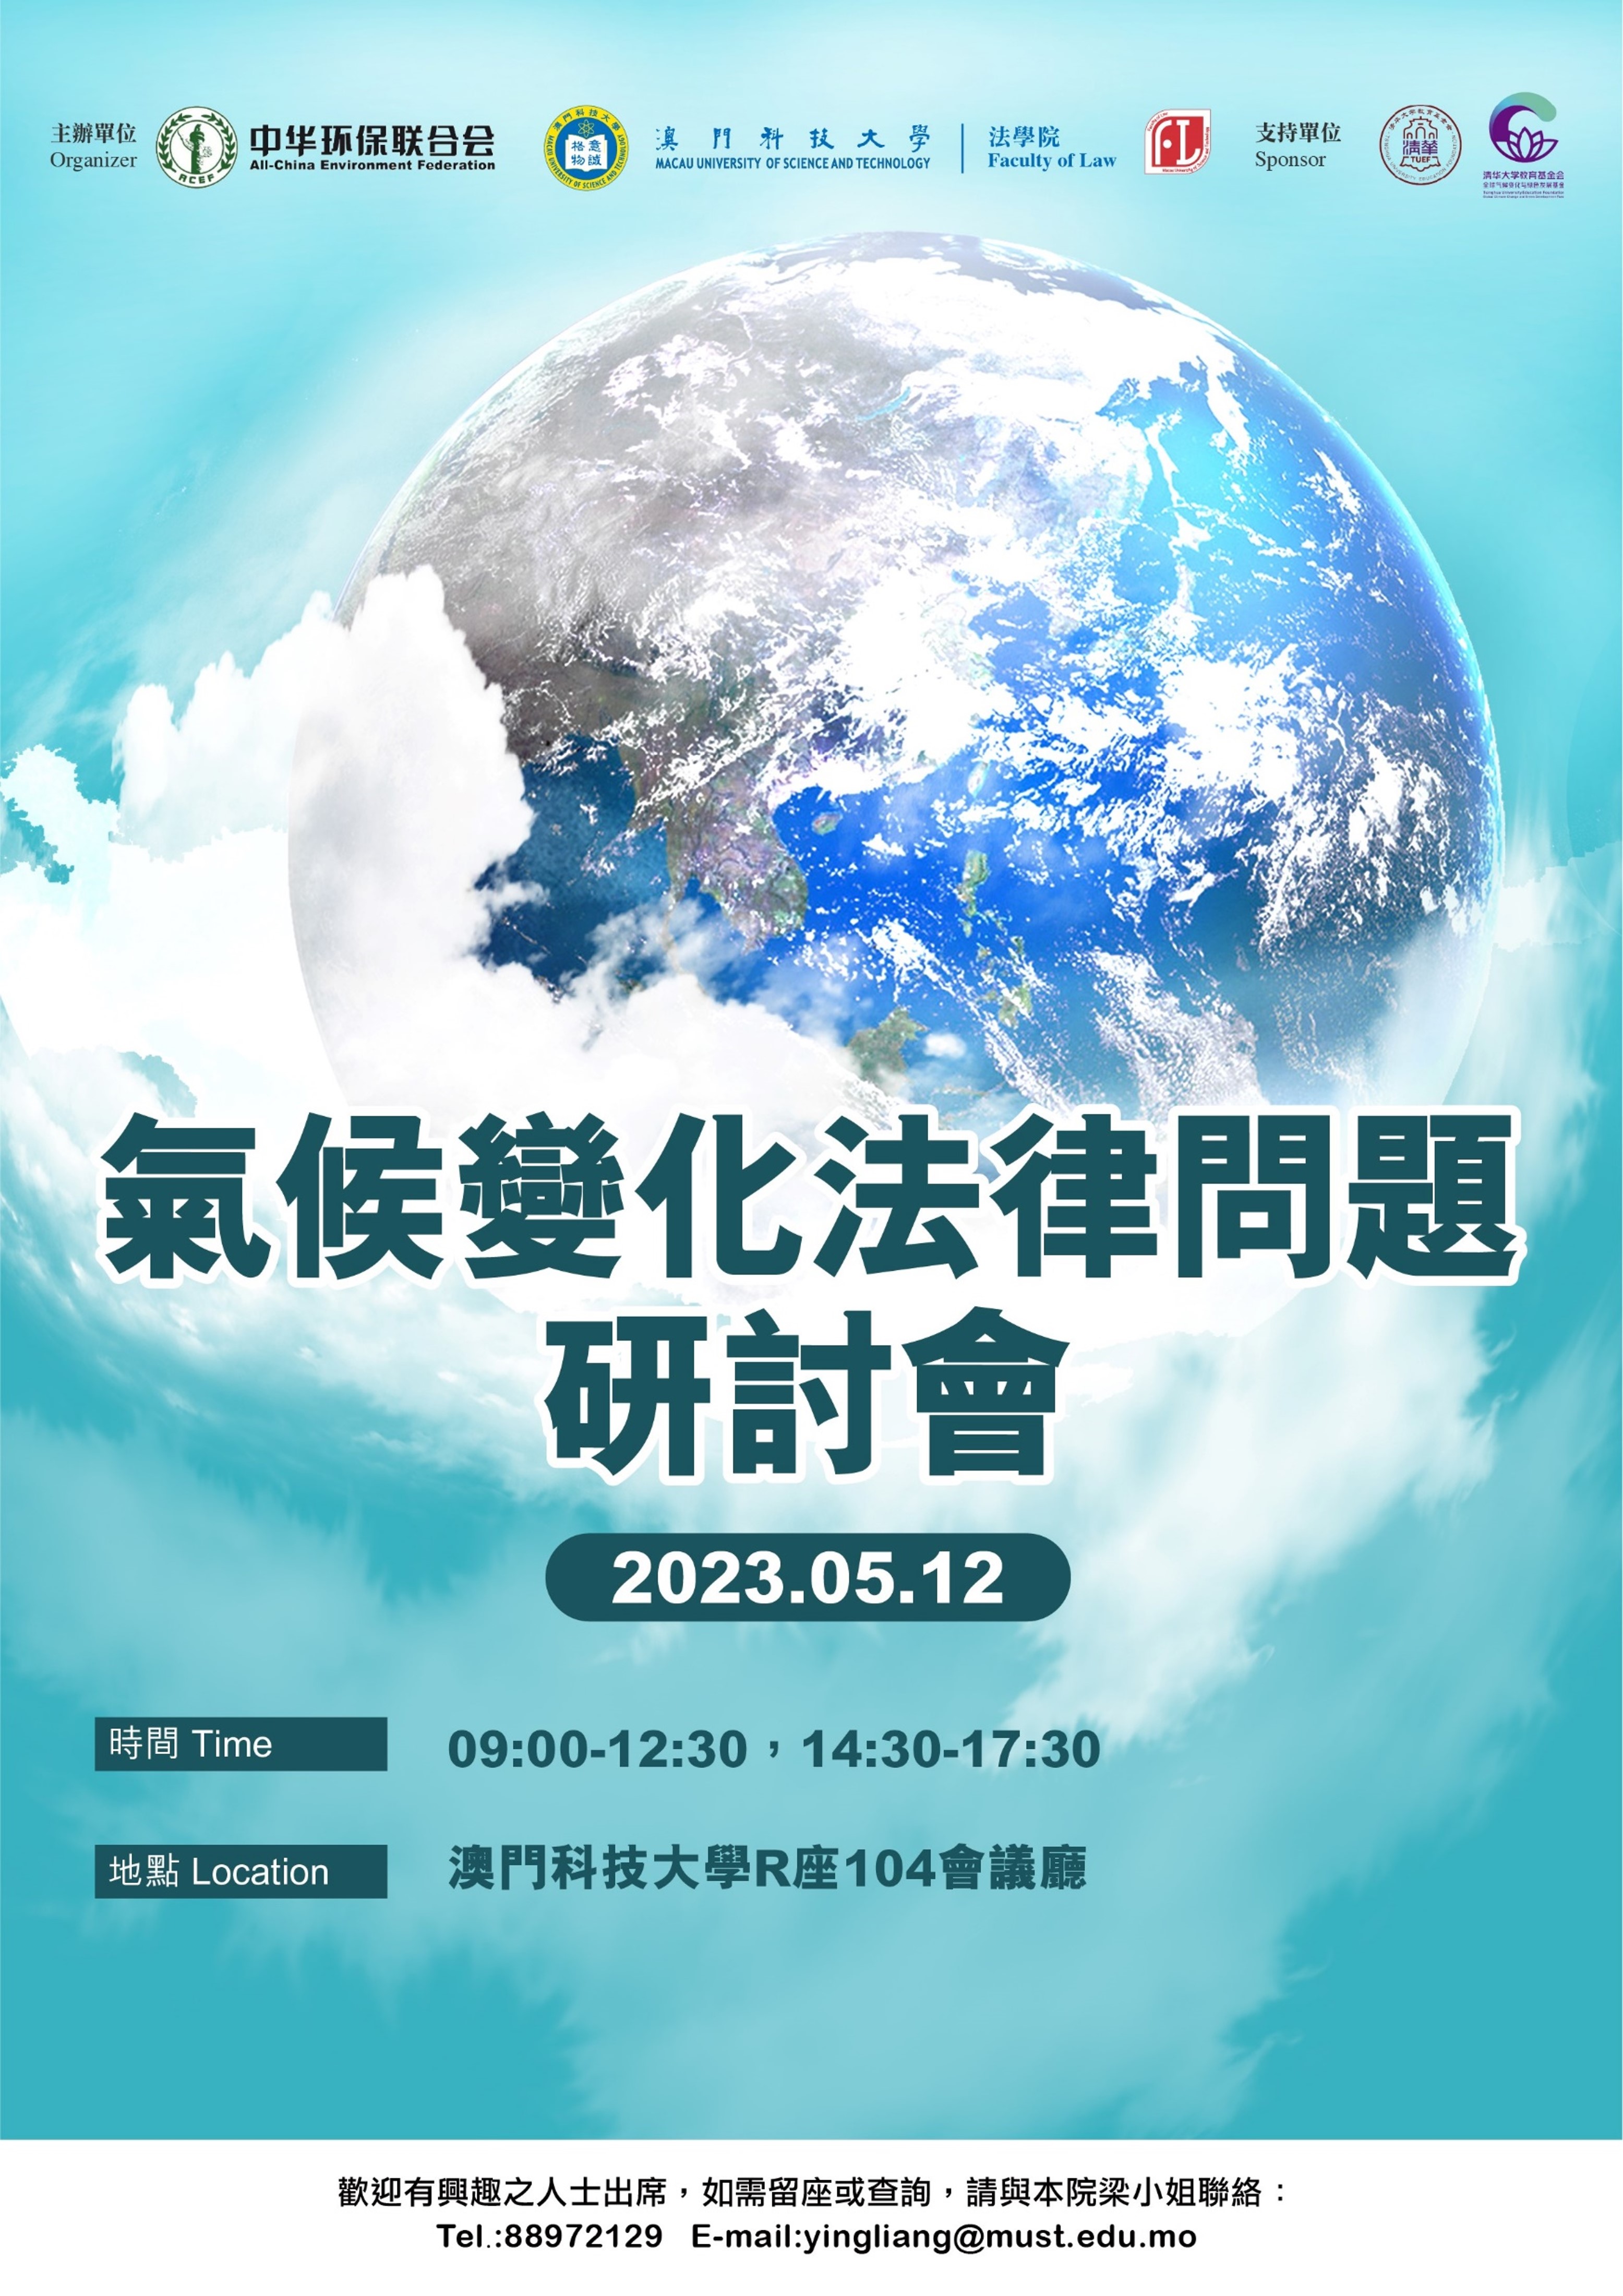 article 20230510fl01 pic氣候變化法律問題研討會海报 new